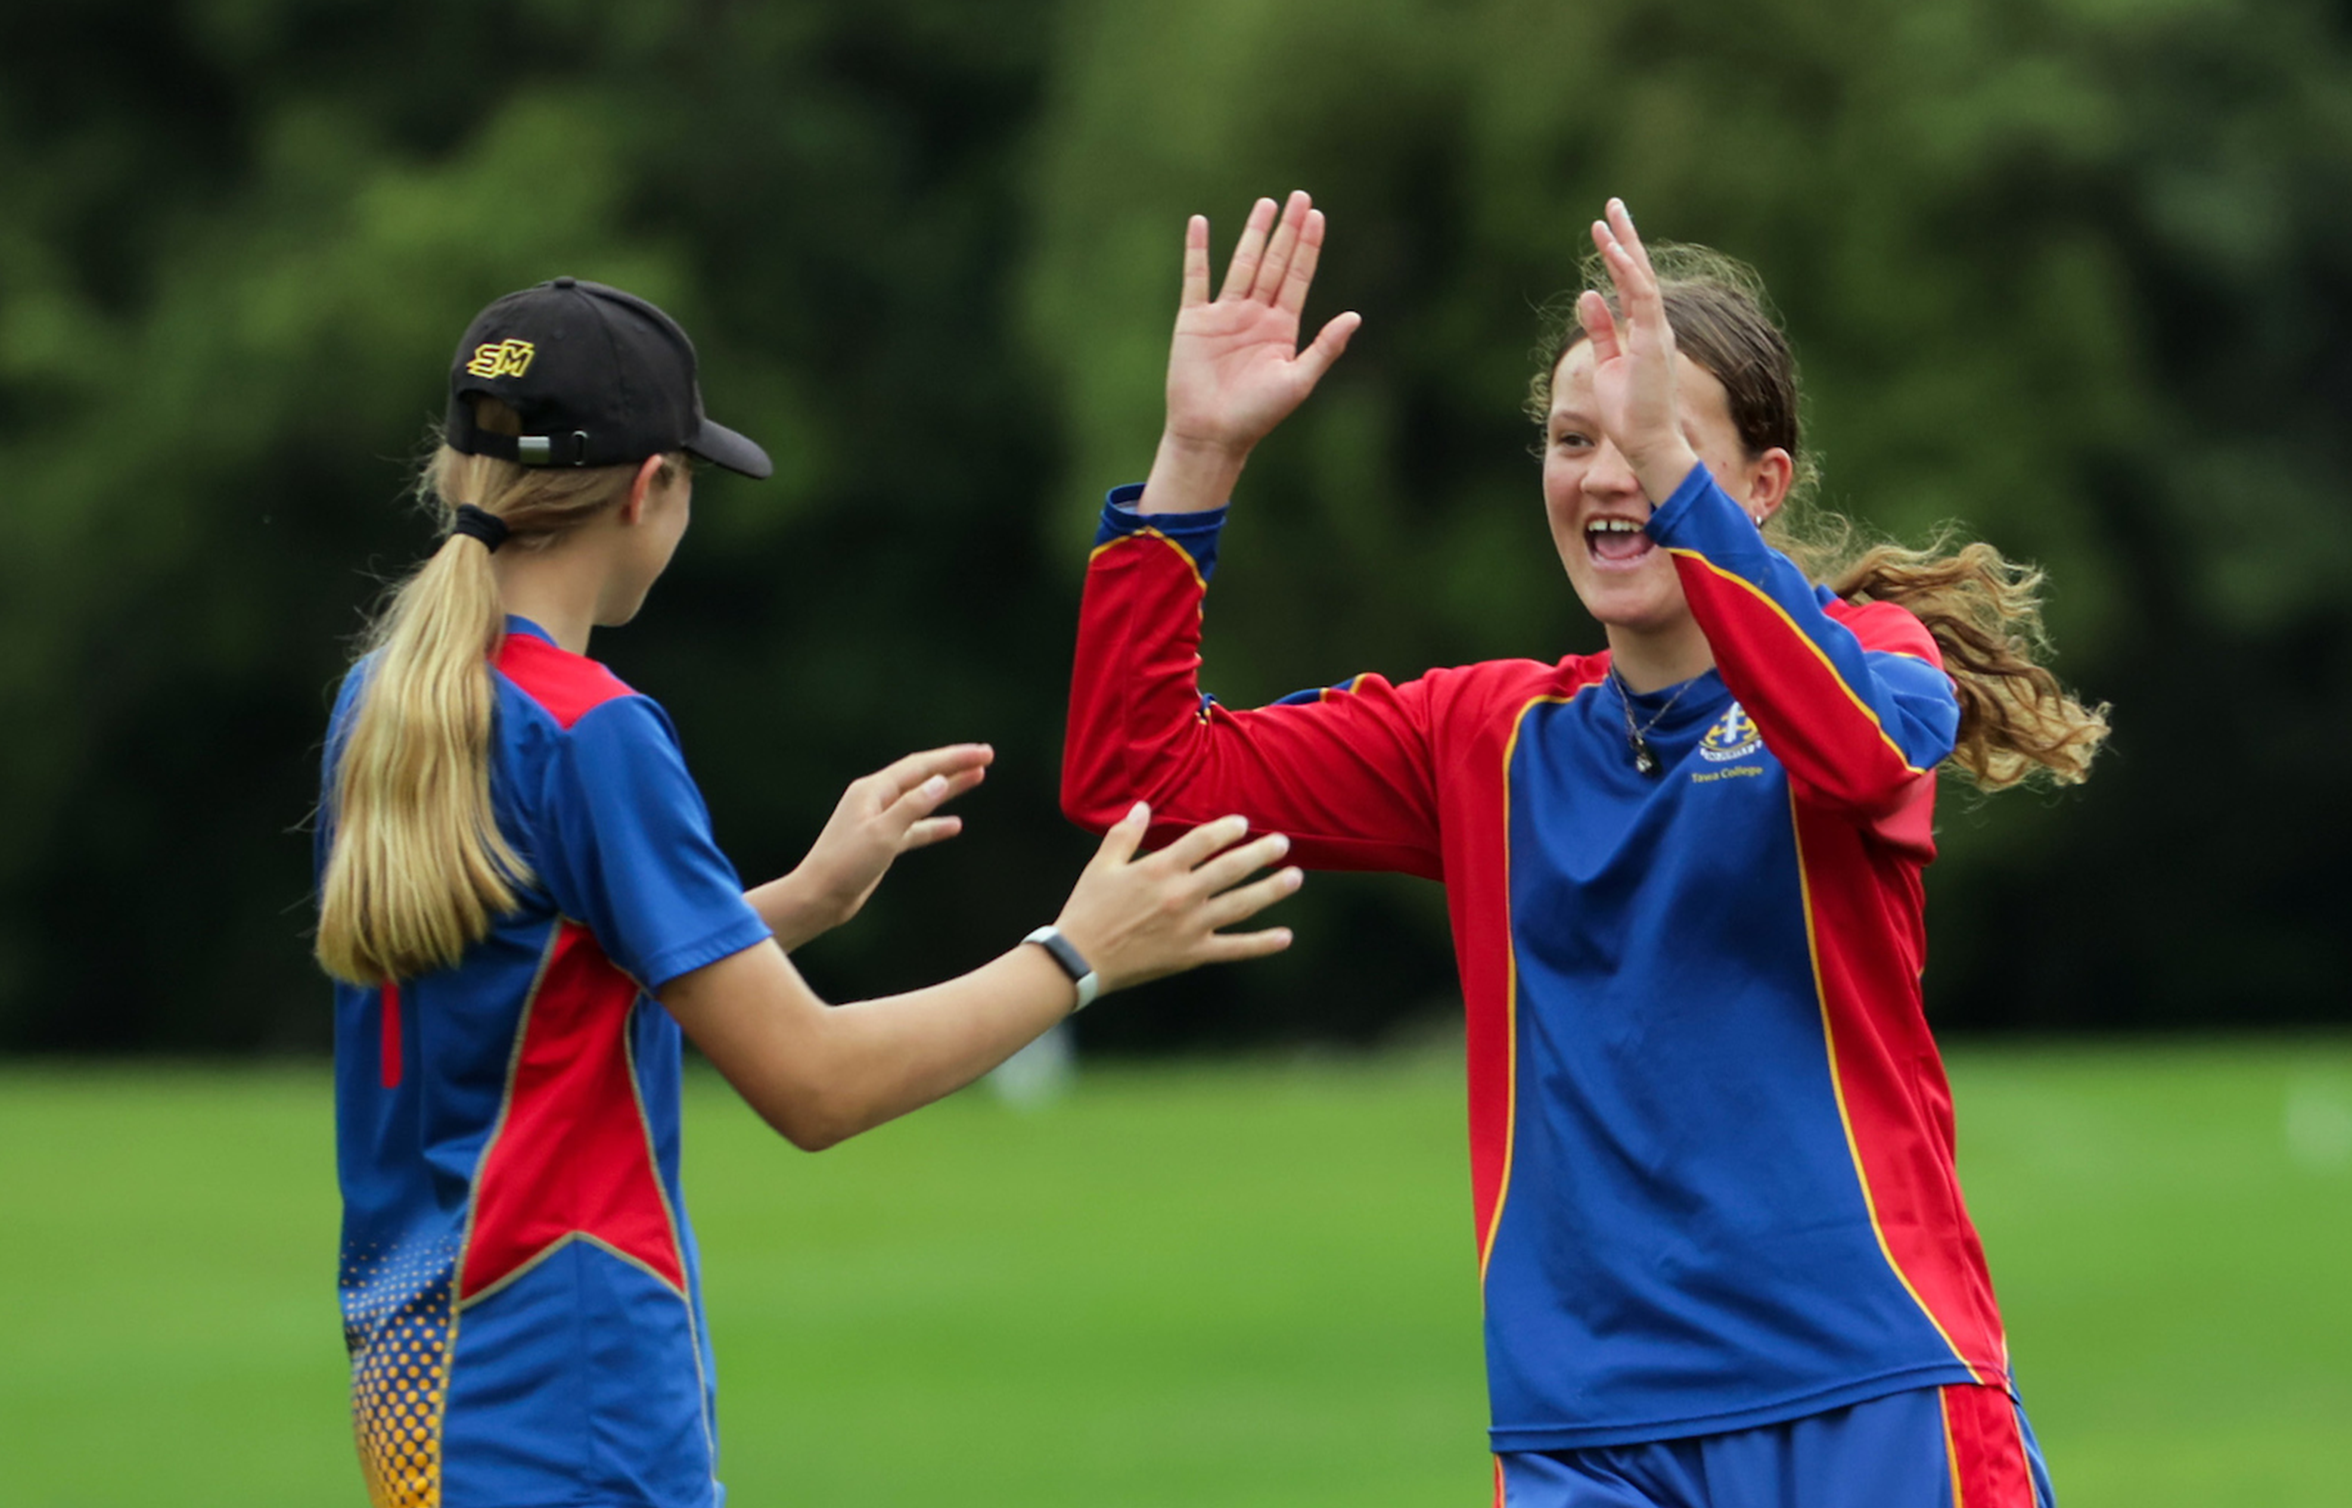 Girls Cricket in Wellington